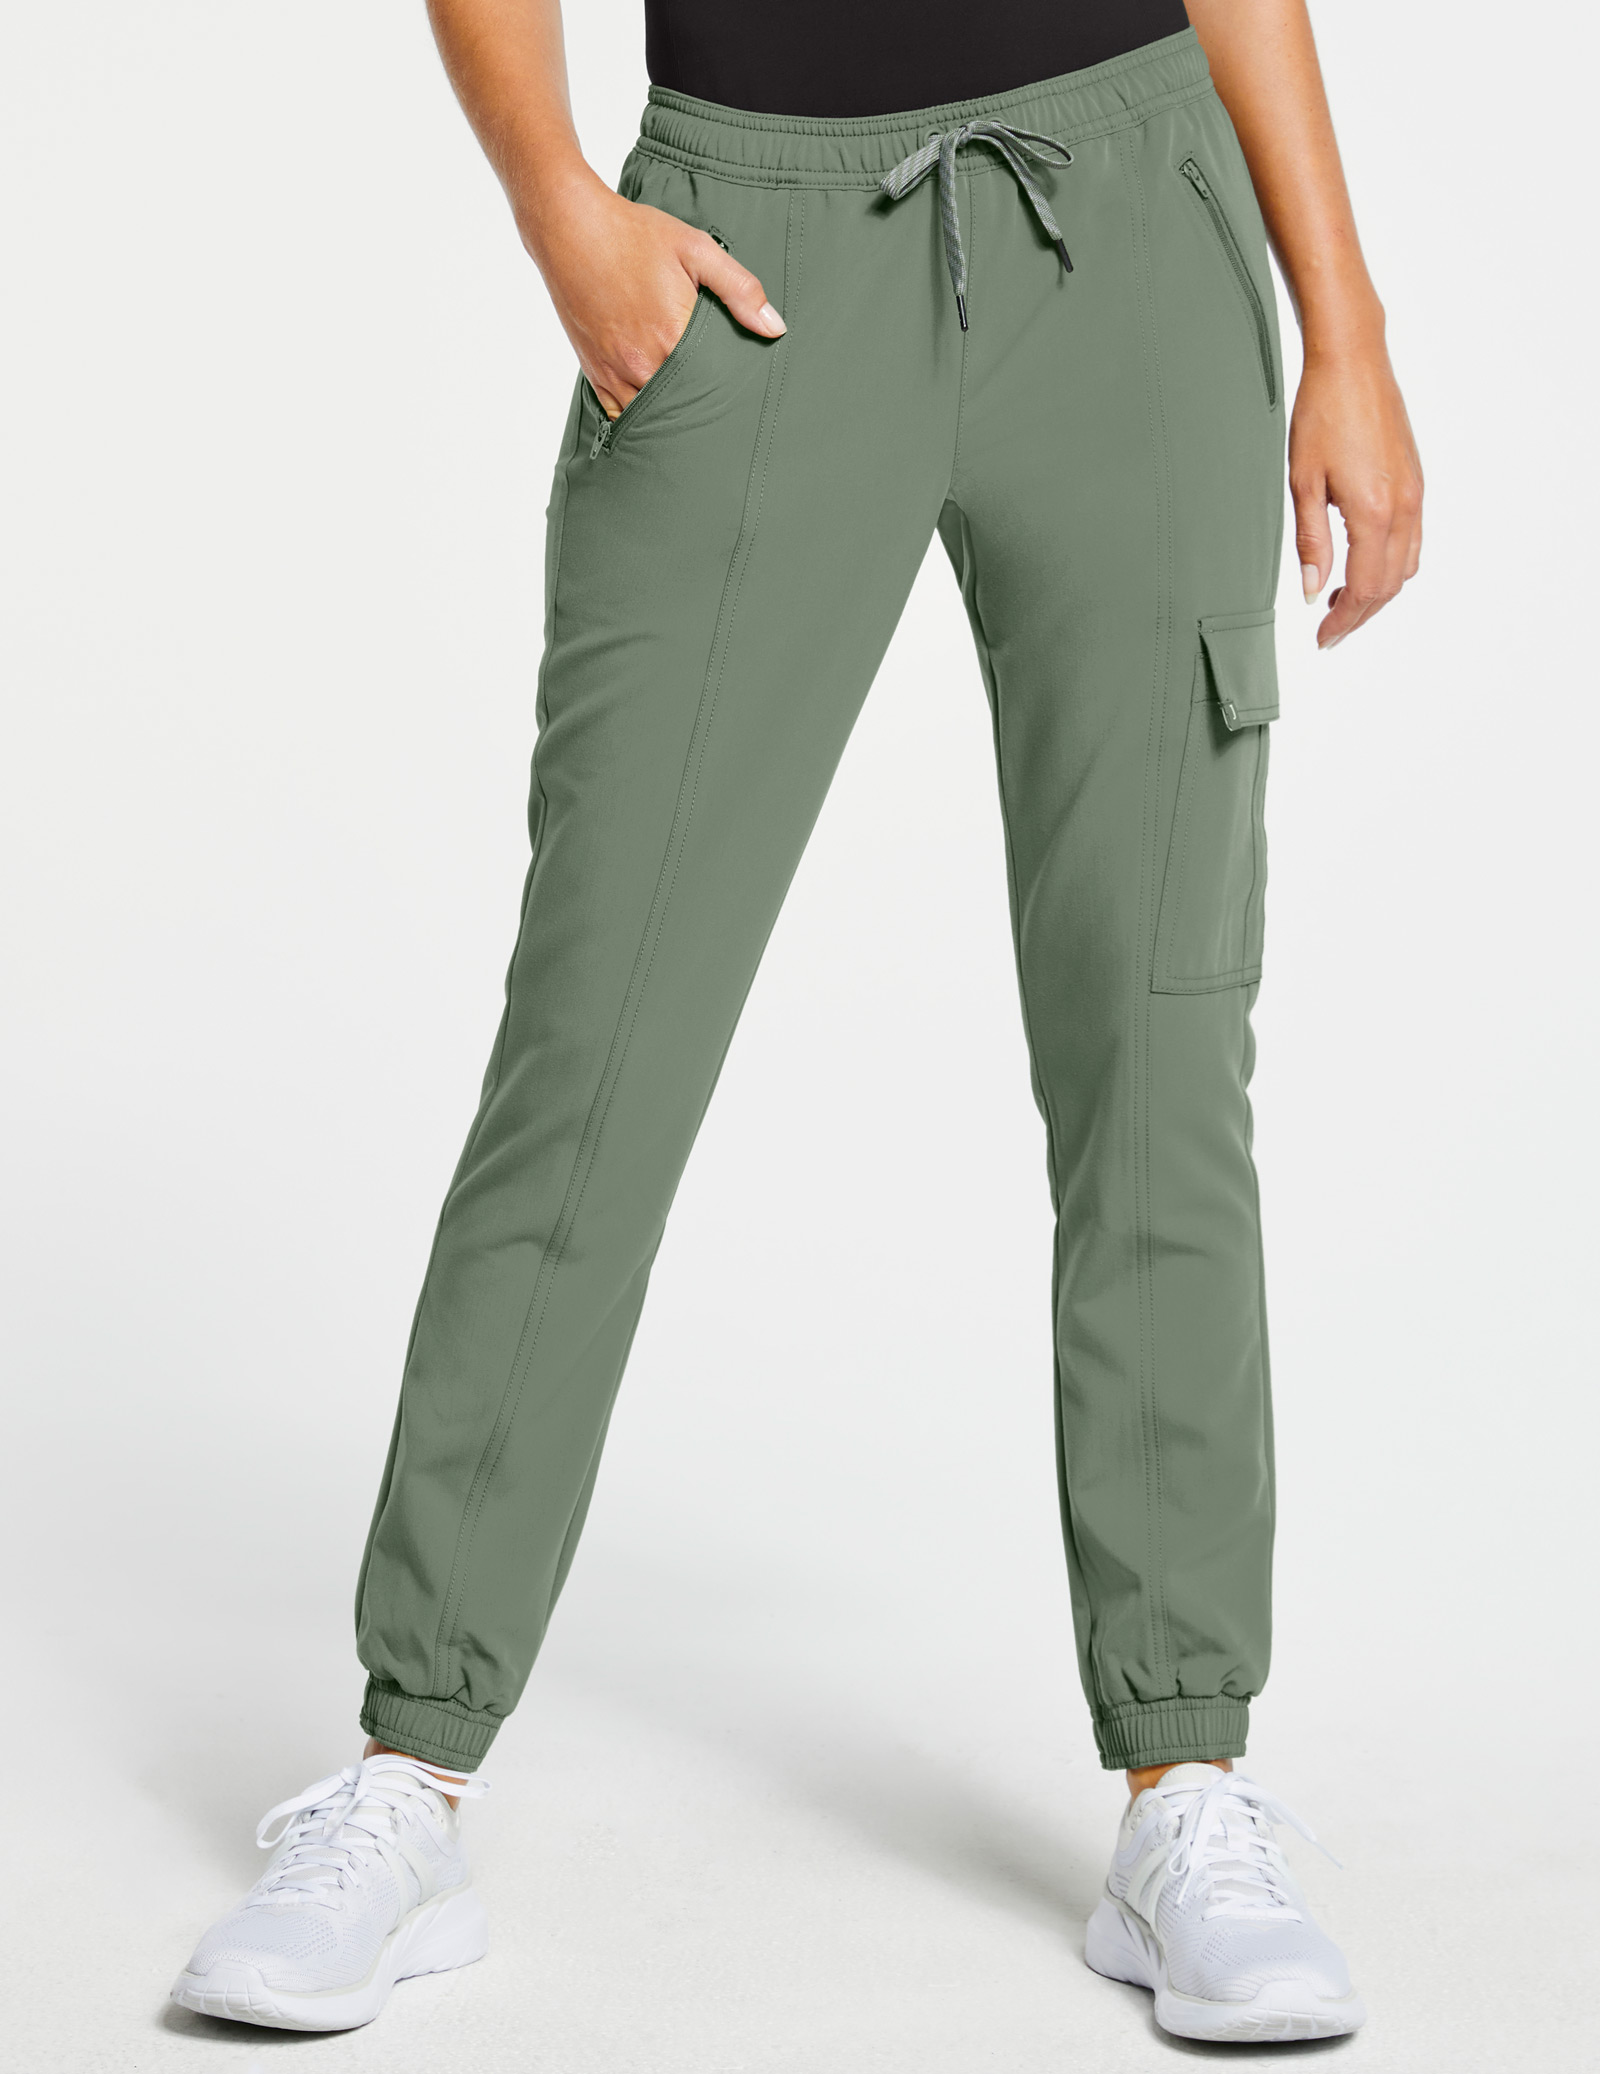 olive green color pants